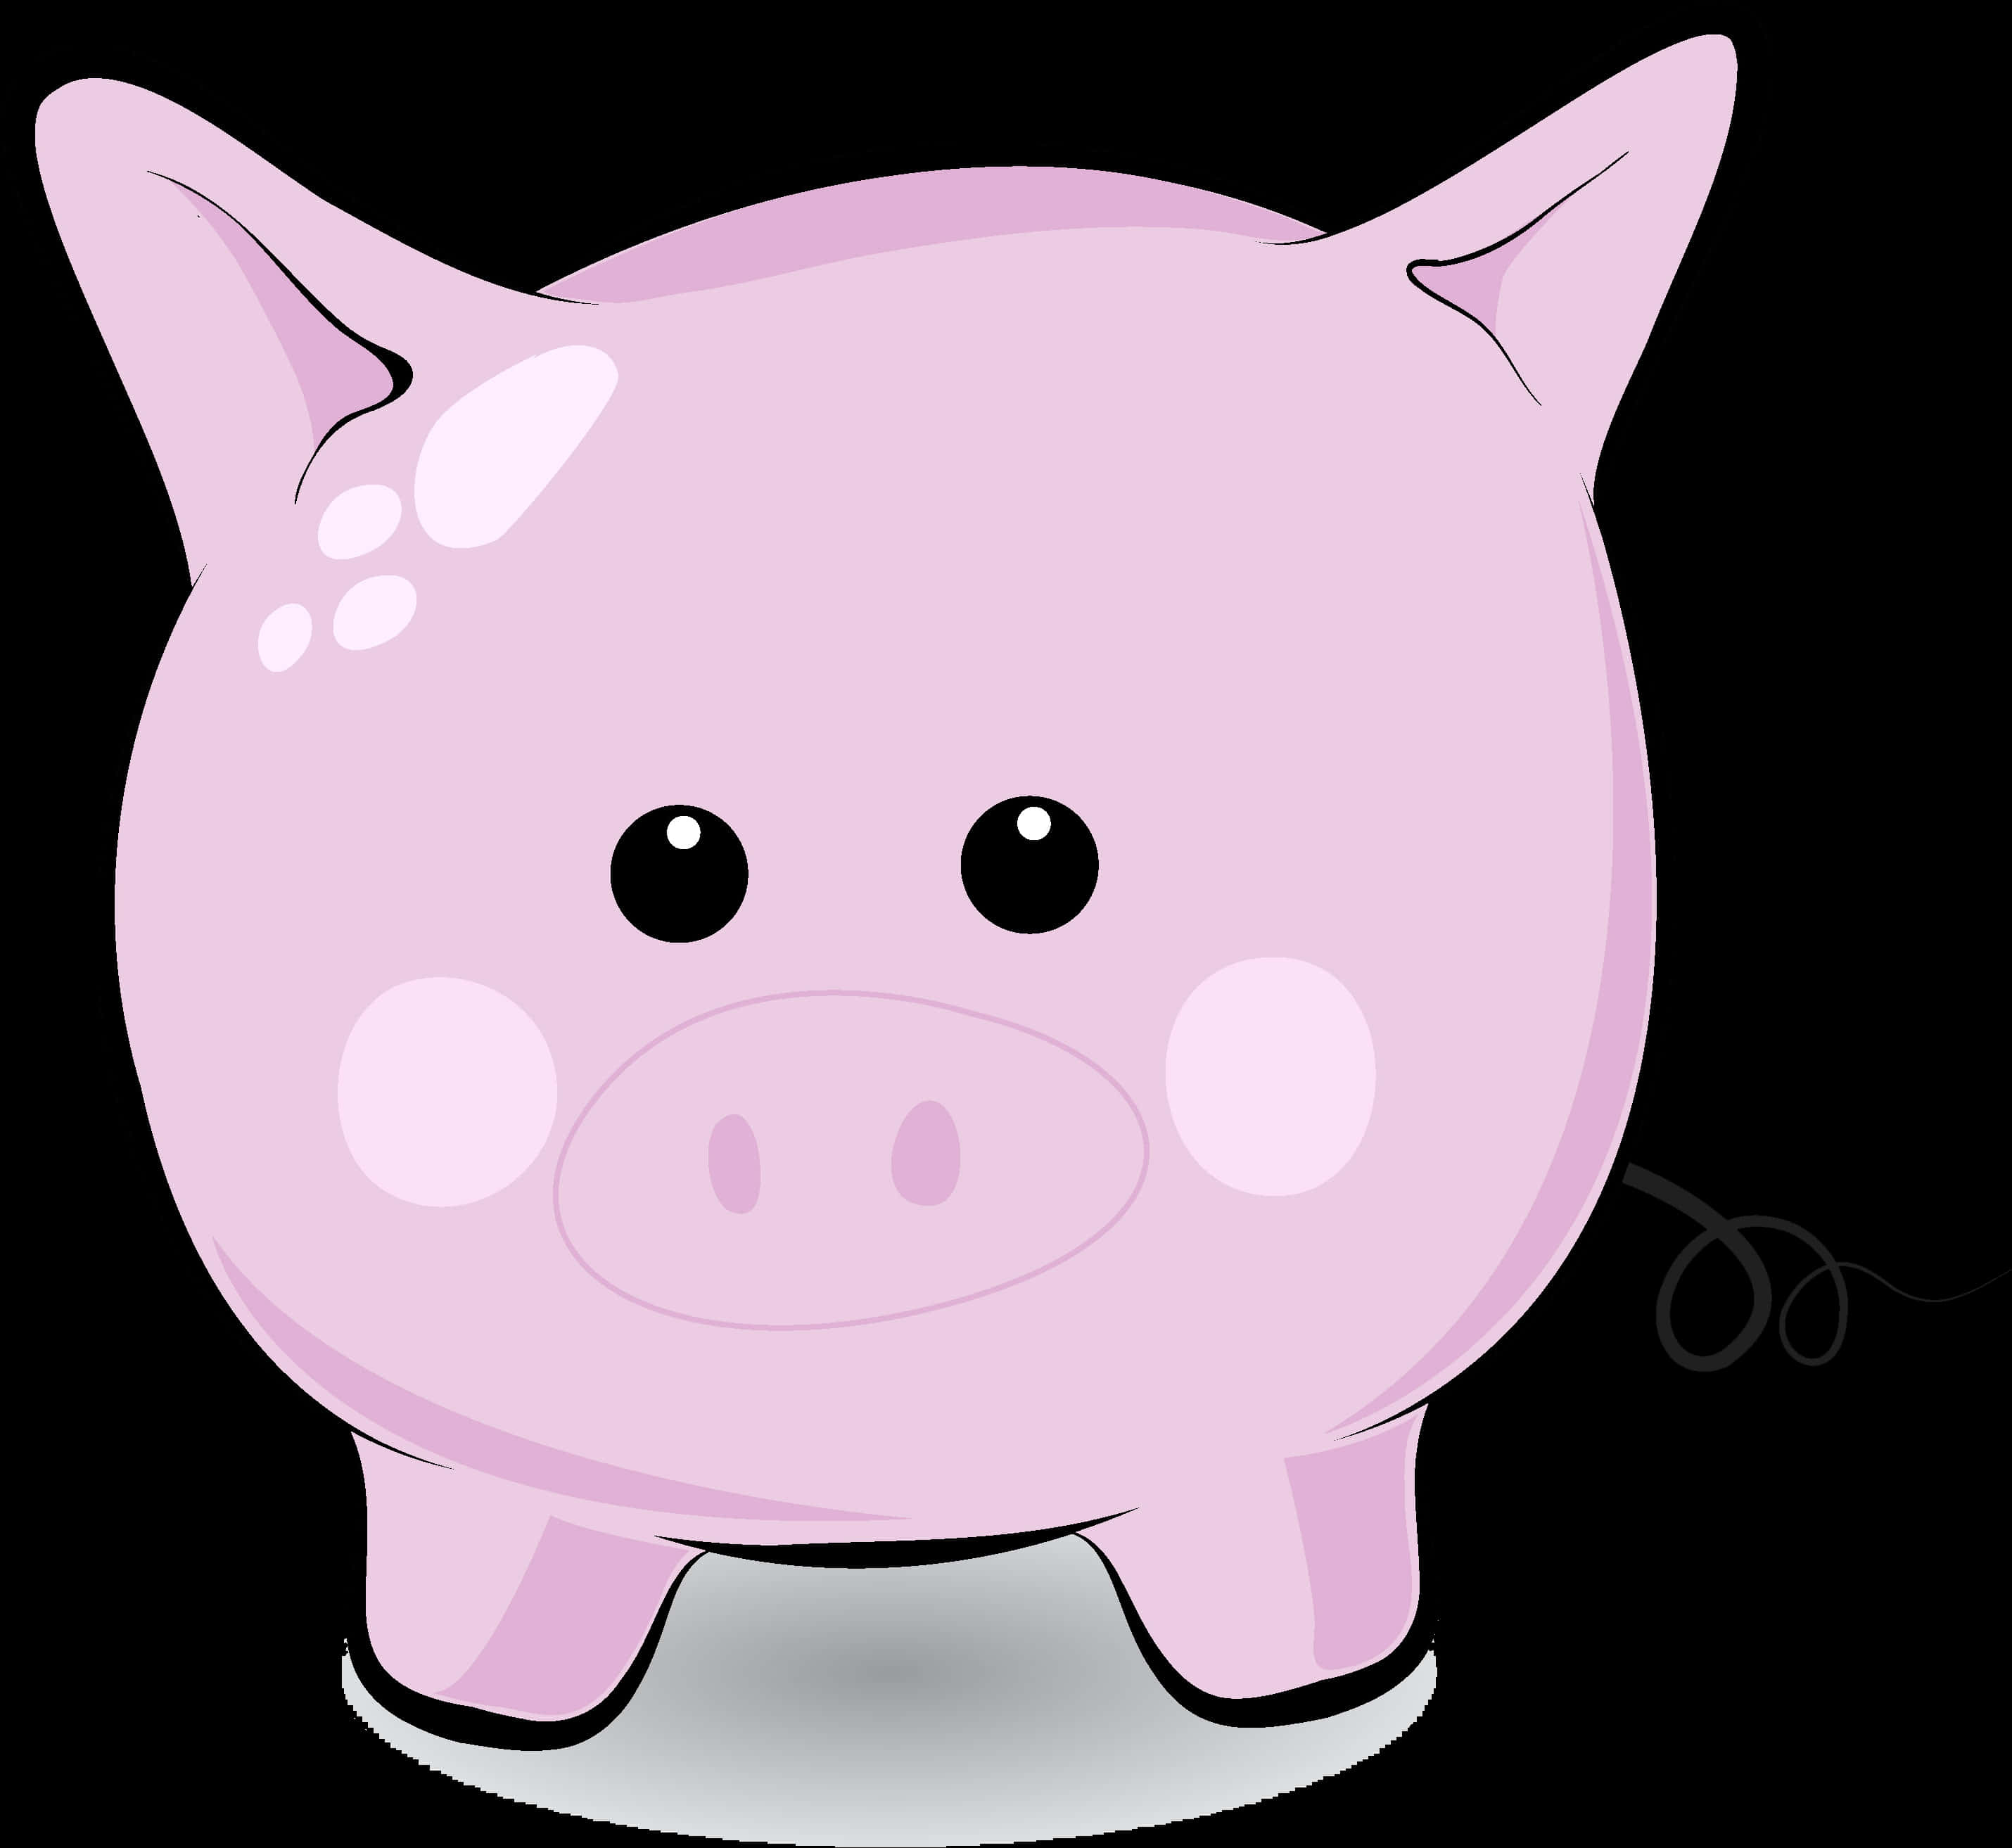 Cute Cartoon Pig Illustration PNG image